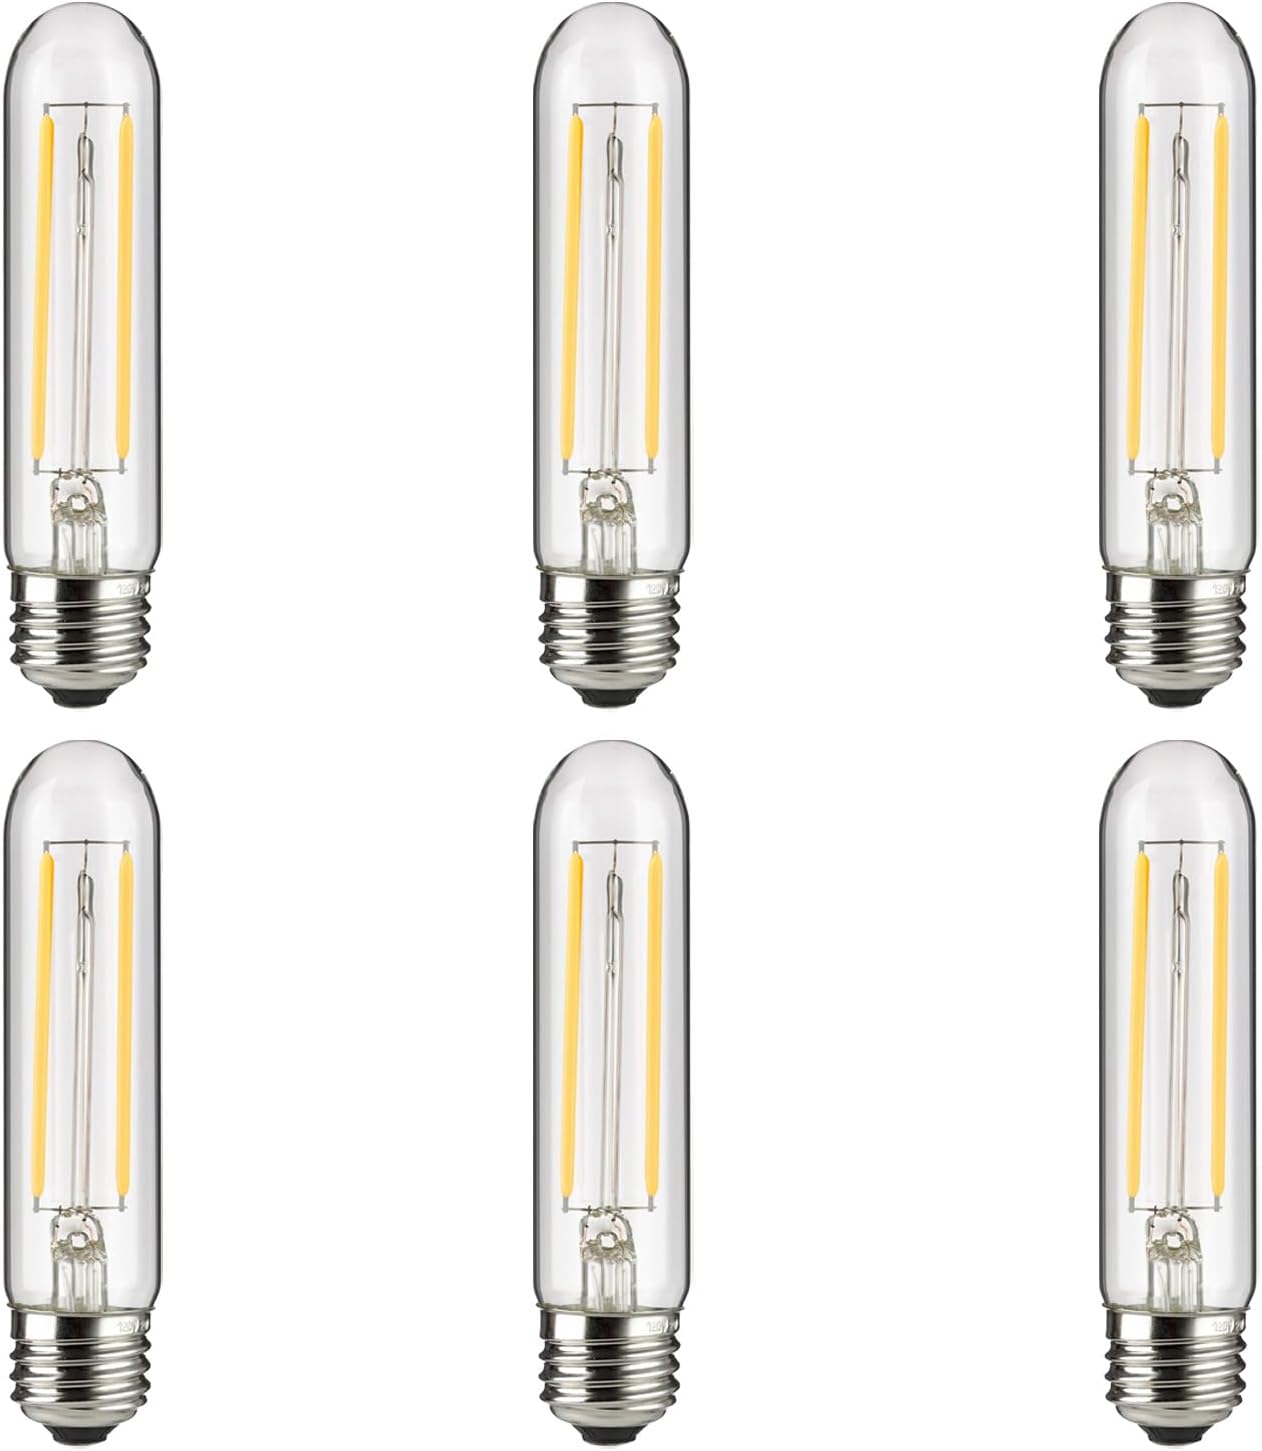 Sunlite 41790 LED Edison T10/T30 Tubular Light Bulb, 2 Watts (25W Equivalent), 160 Lumens, Medium E26 Base, 120 Volts, Dimmable, 90 CRI, UL Listed, Clear, 2700K Soft White, 6 Pack